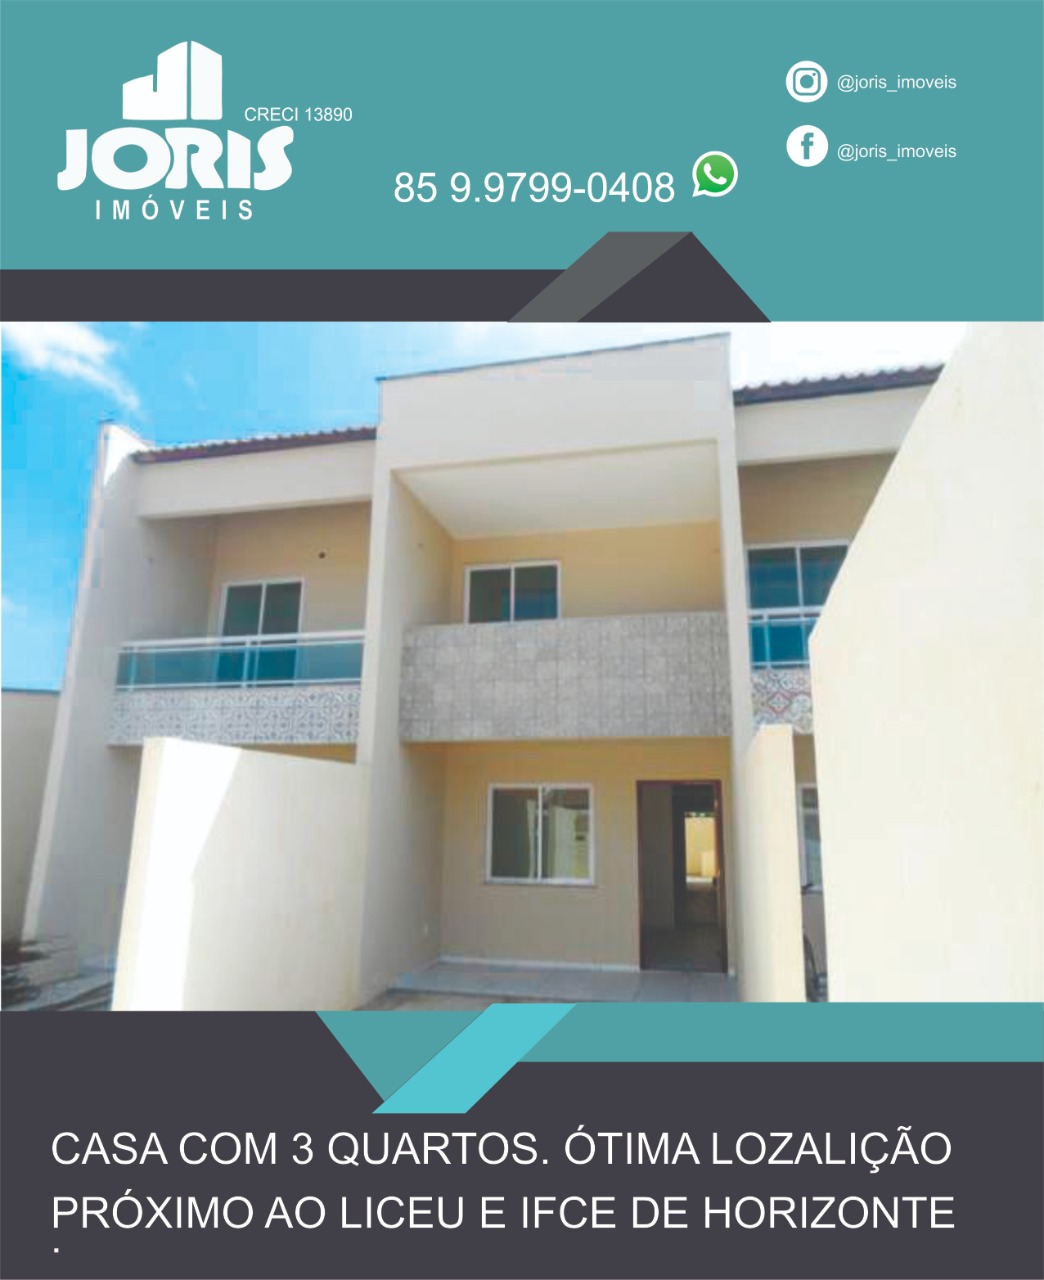 Casas a Venda em Fortaleza, Ceará. Brazil